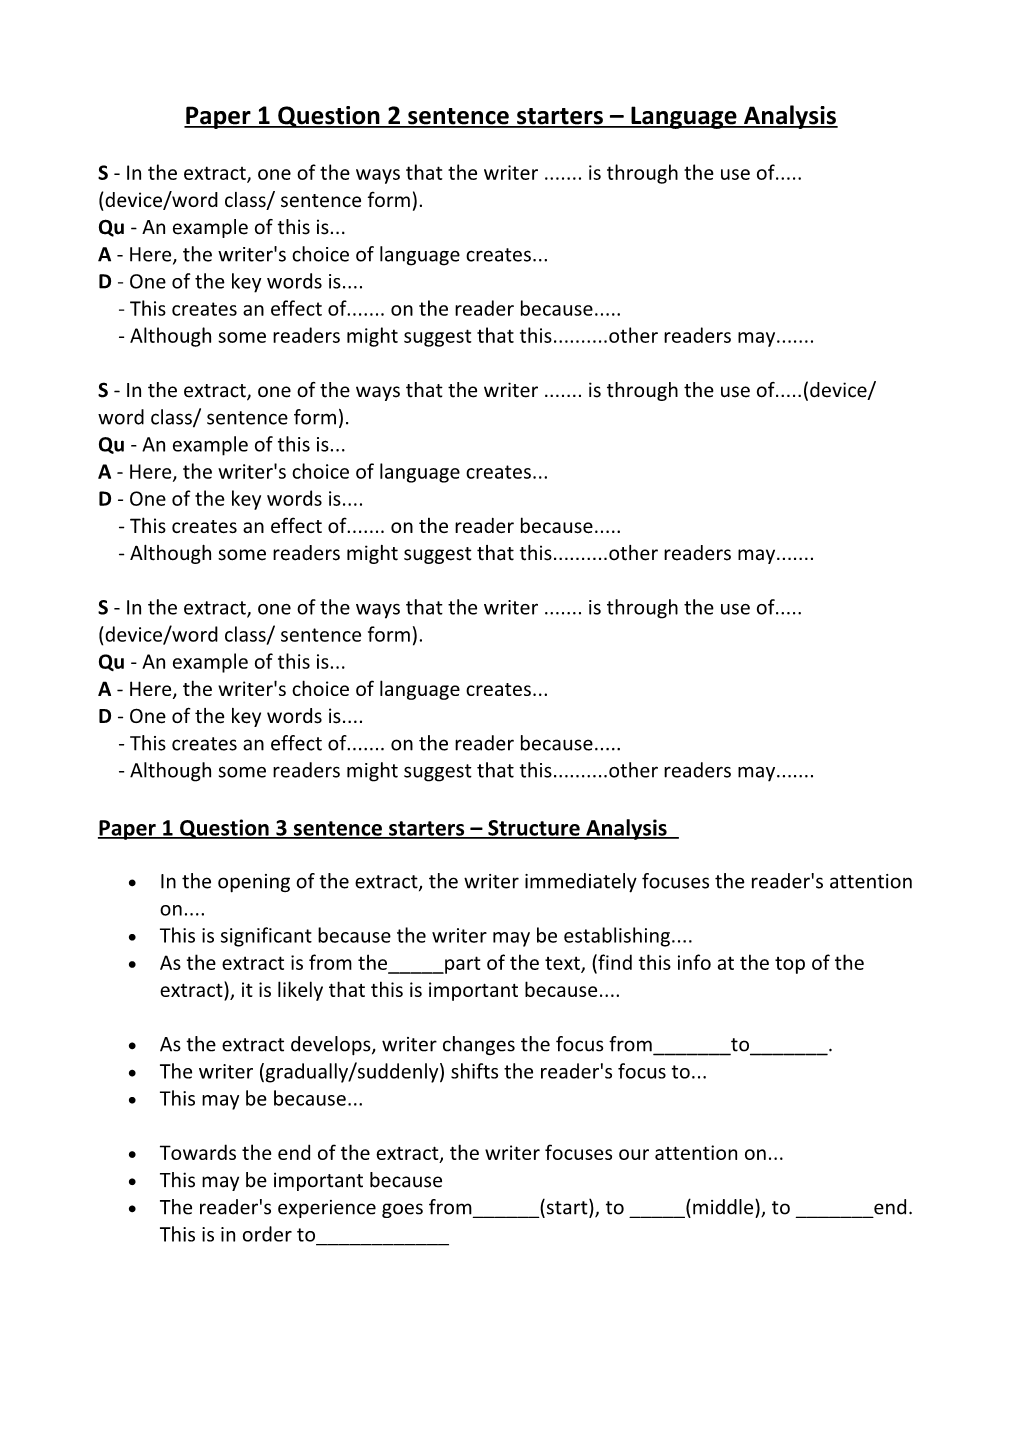 Paper 1 Question 2 Sentence Starters Language Analysis